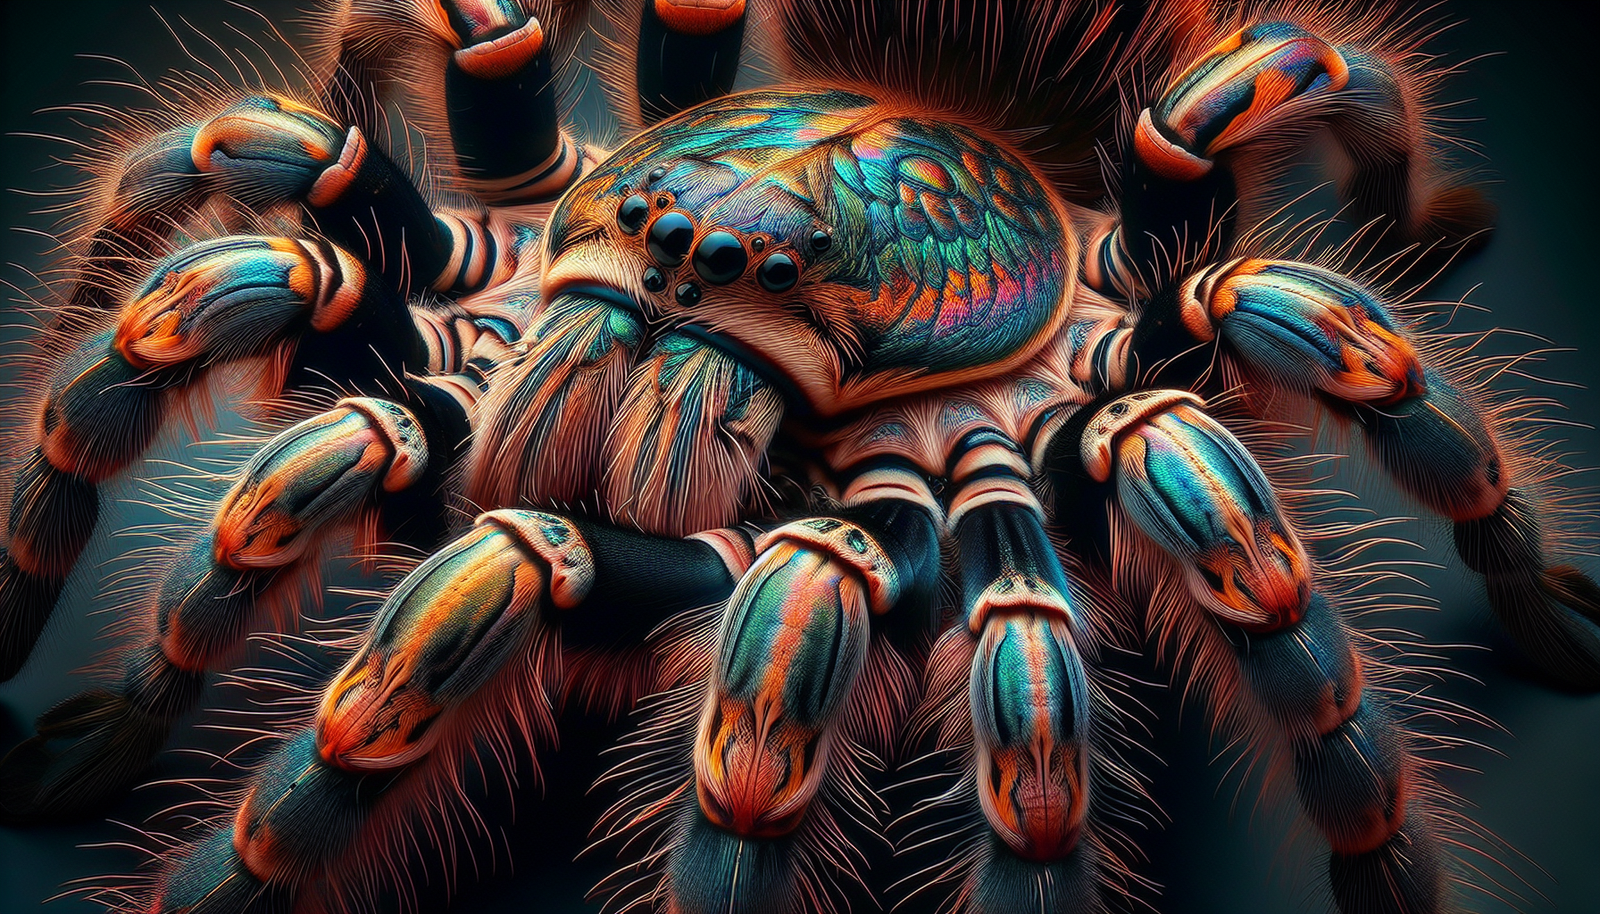 What Are The Unique Characteristics Of The Vibrant Venezuelan Sunburst Tarantula?